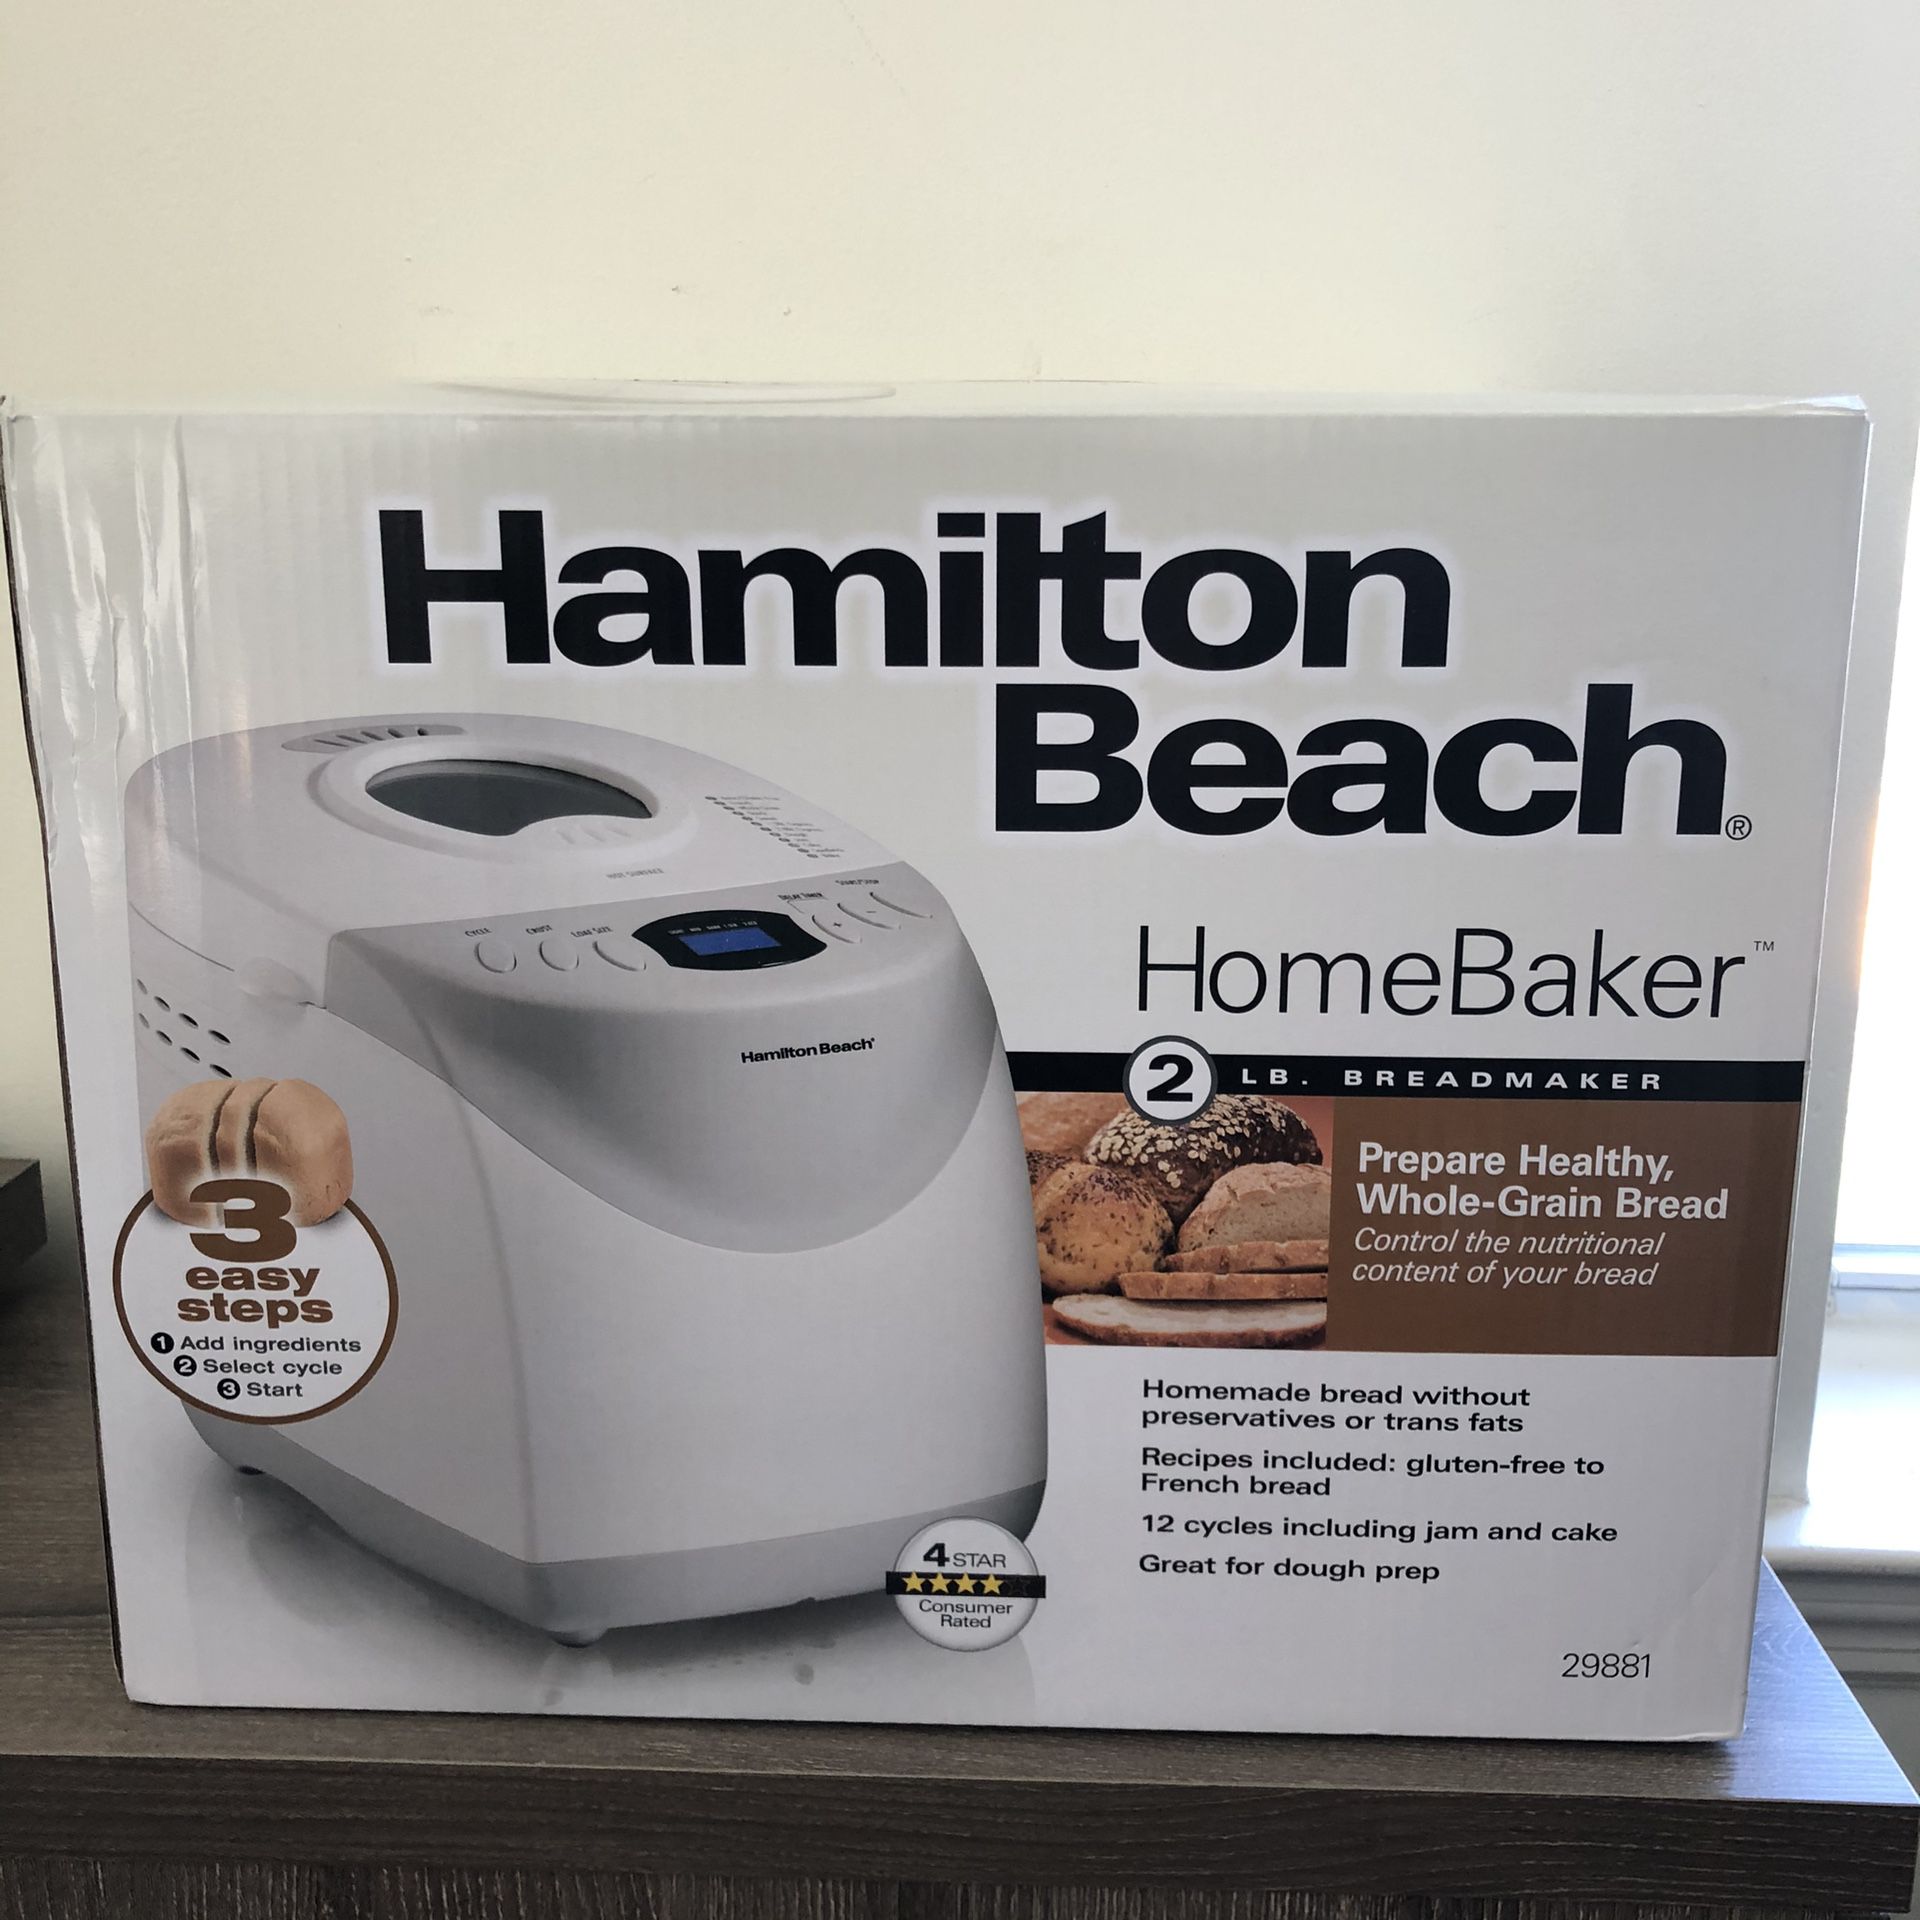 Hamilton Beach 2 lb Digital Bread Maker Model #29881 - New!